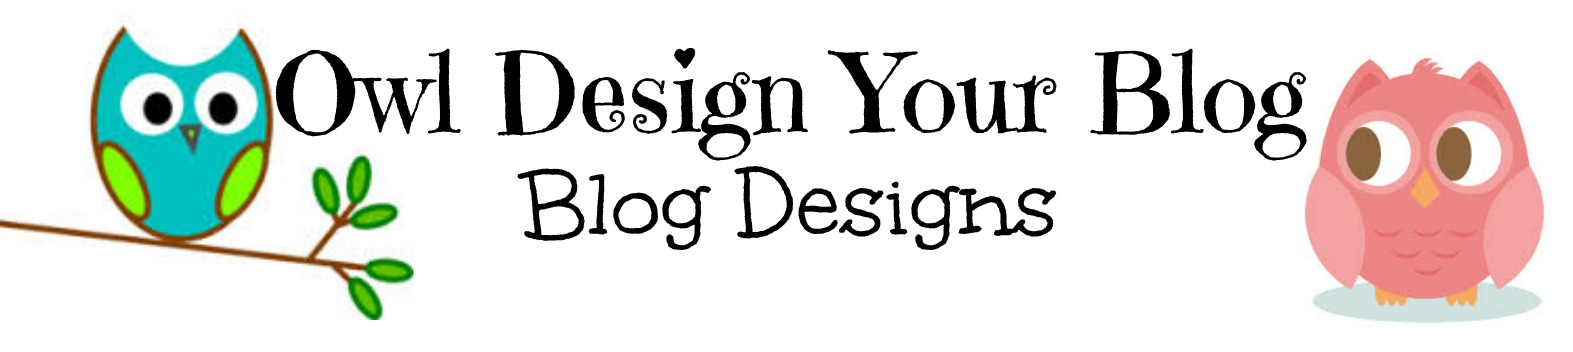 Owl Design Your Blog